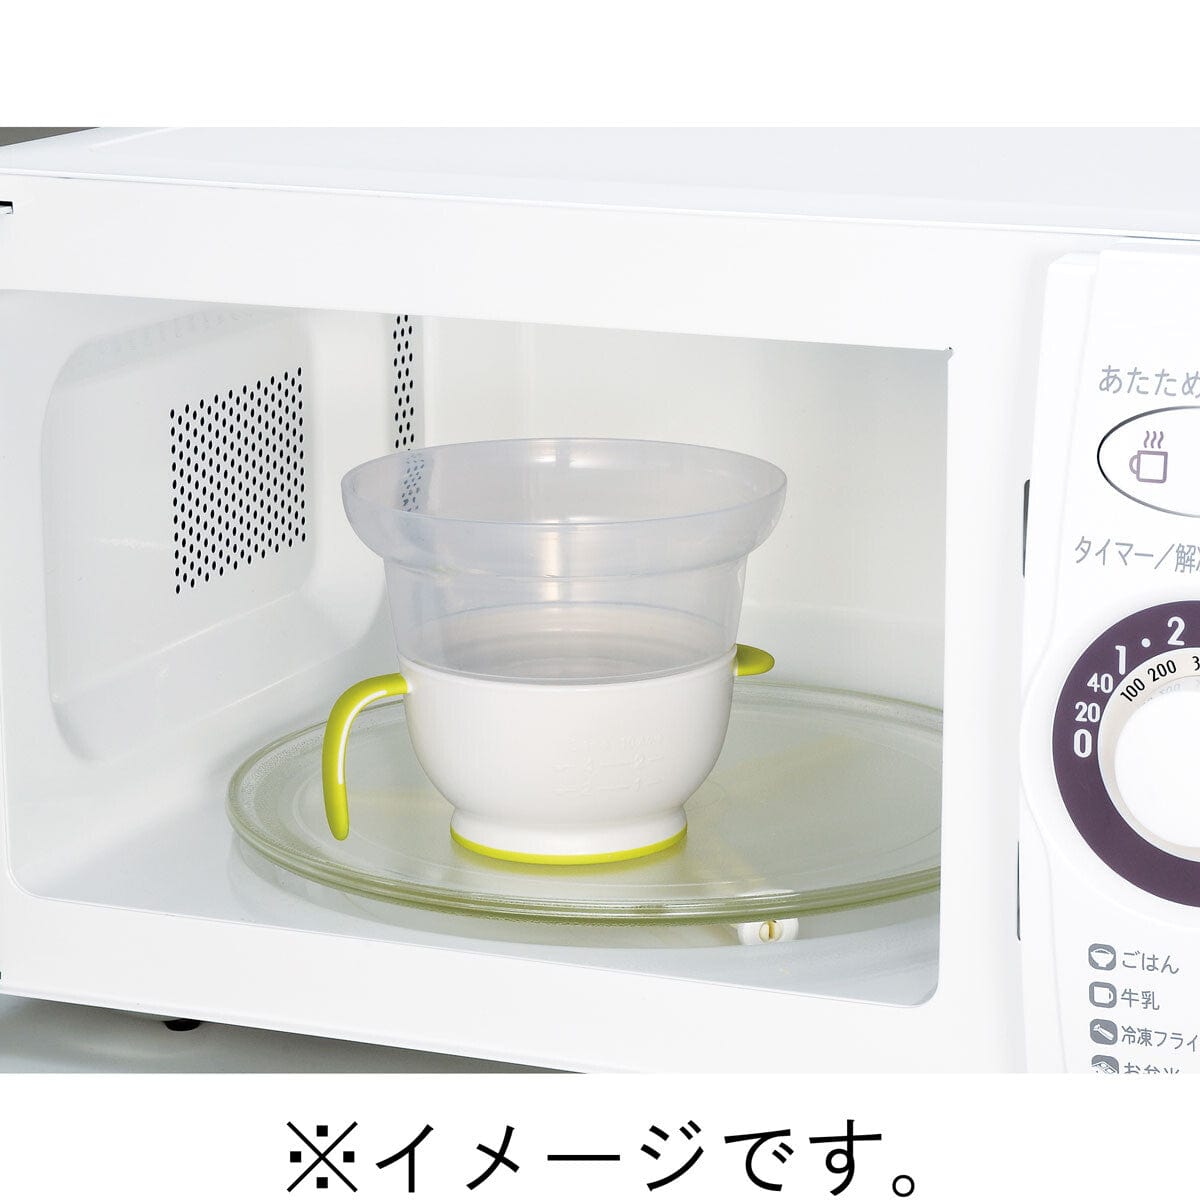 Richell - Microwave Baby Porridge Cooker -  Baby Food Processor  Durio.sg